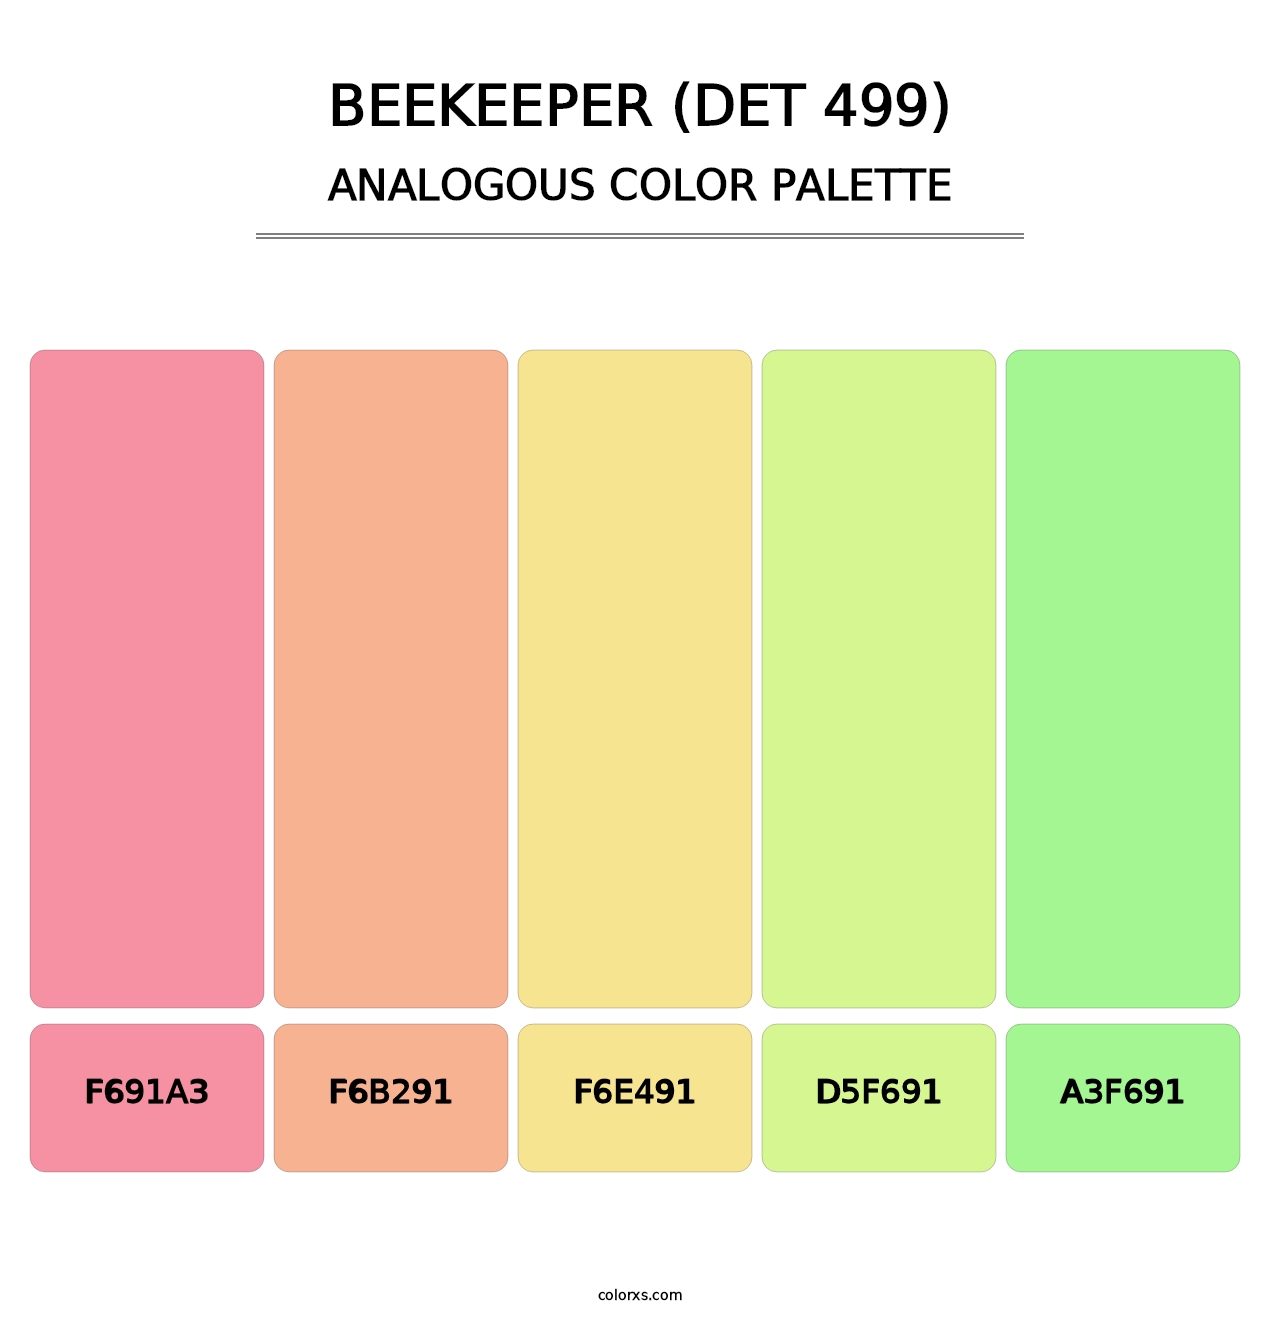 Beekeeper (DET 499) - Analogous Color Palette